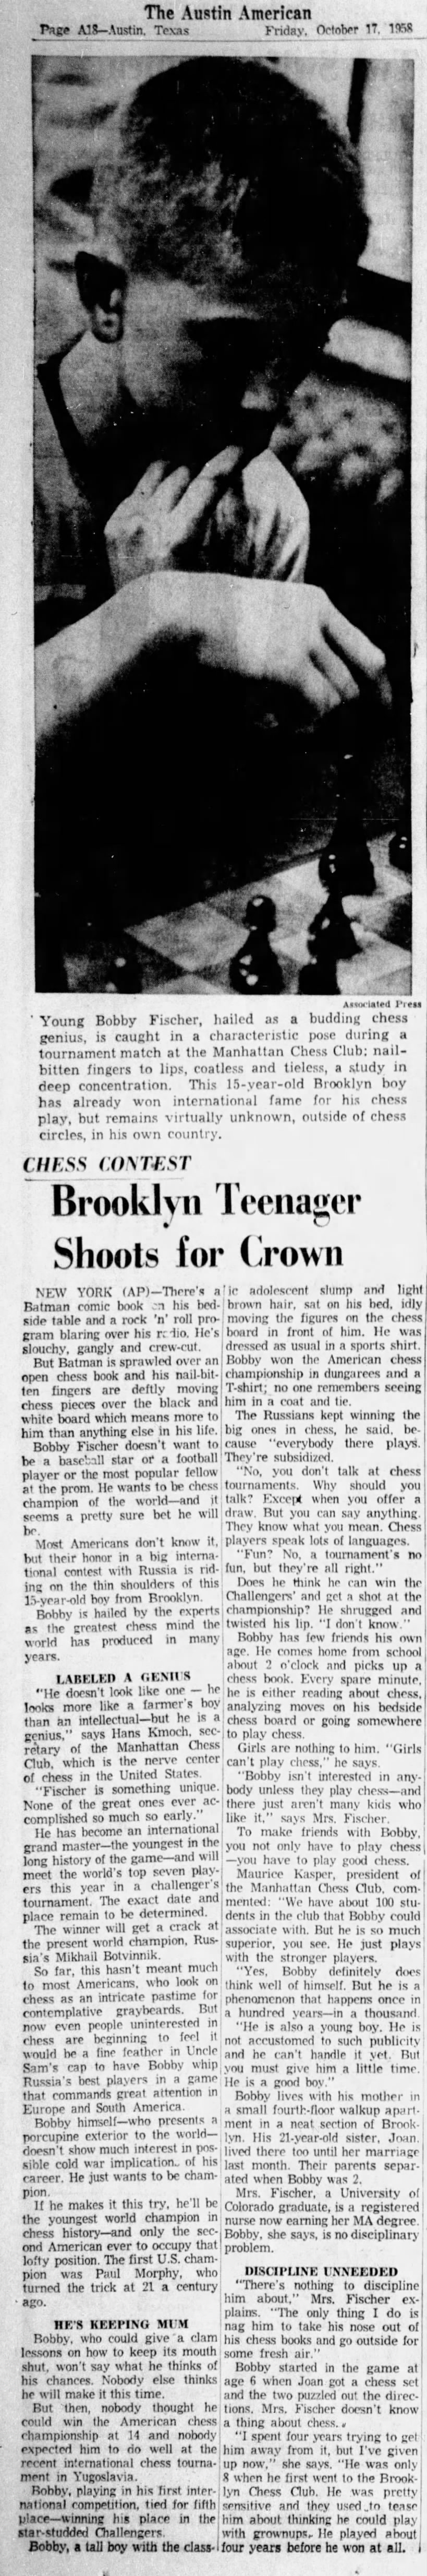 Brooklyn Teenager Shoots for Crown